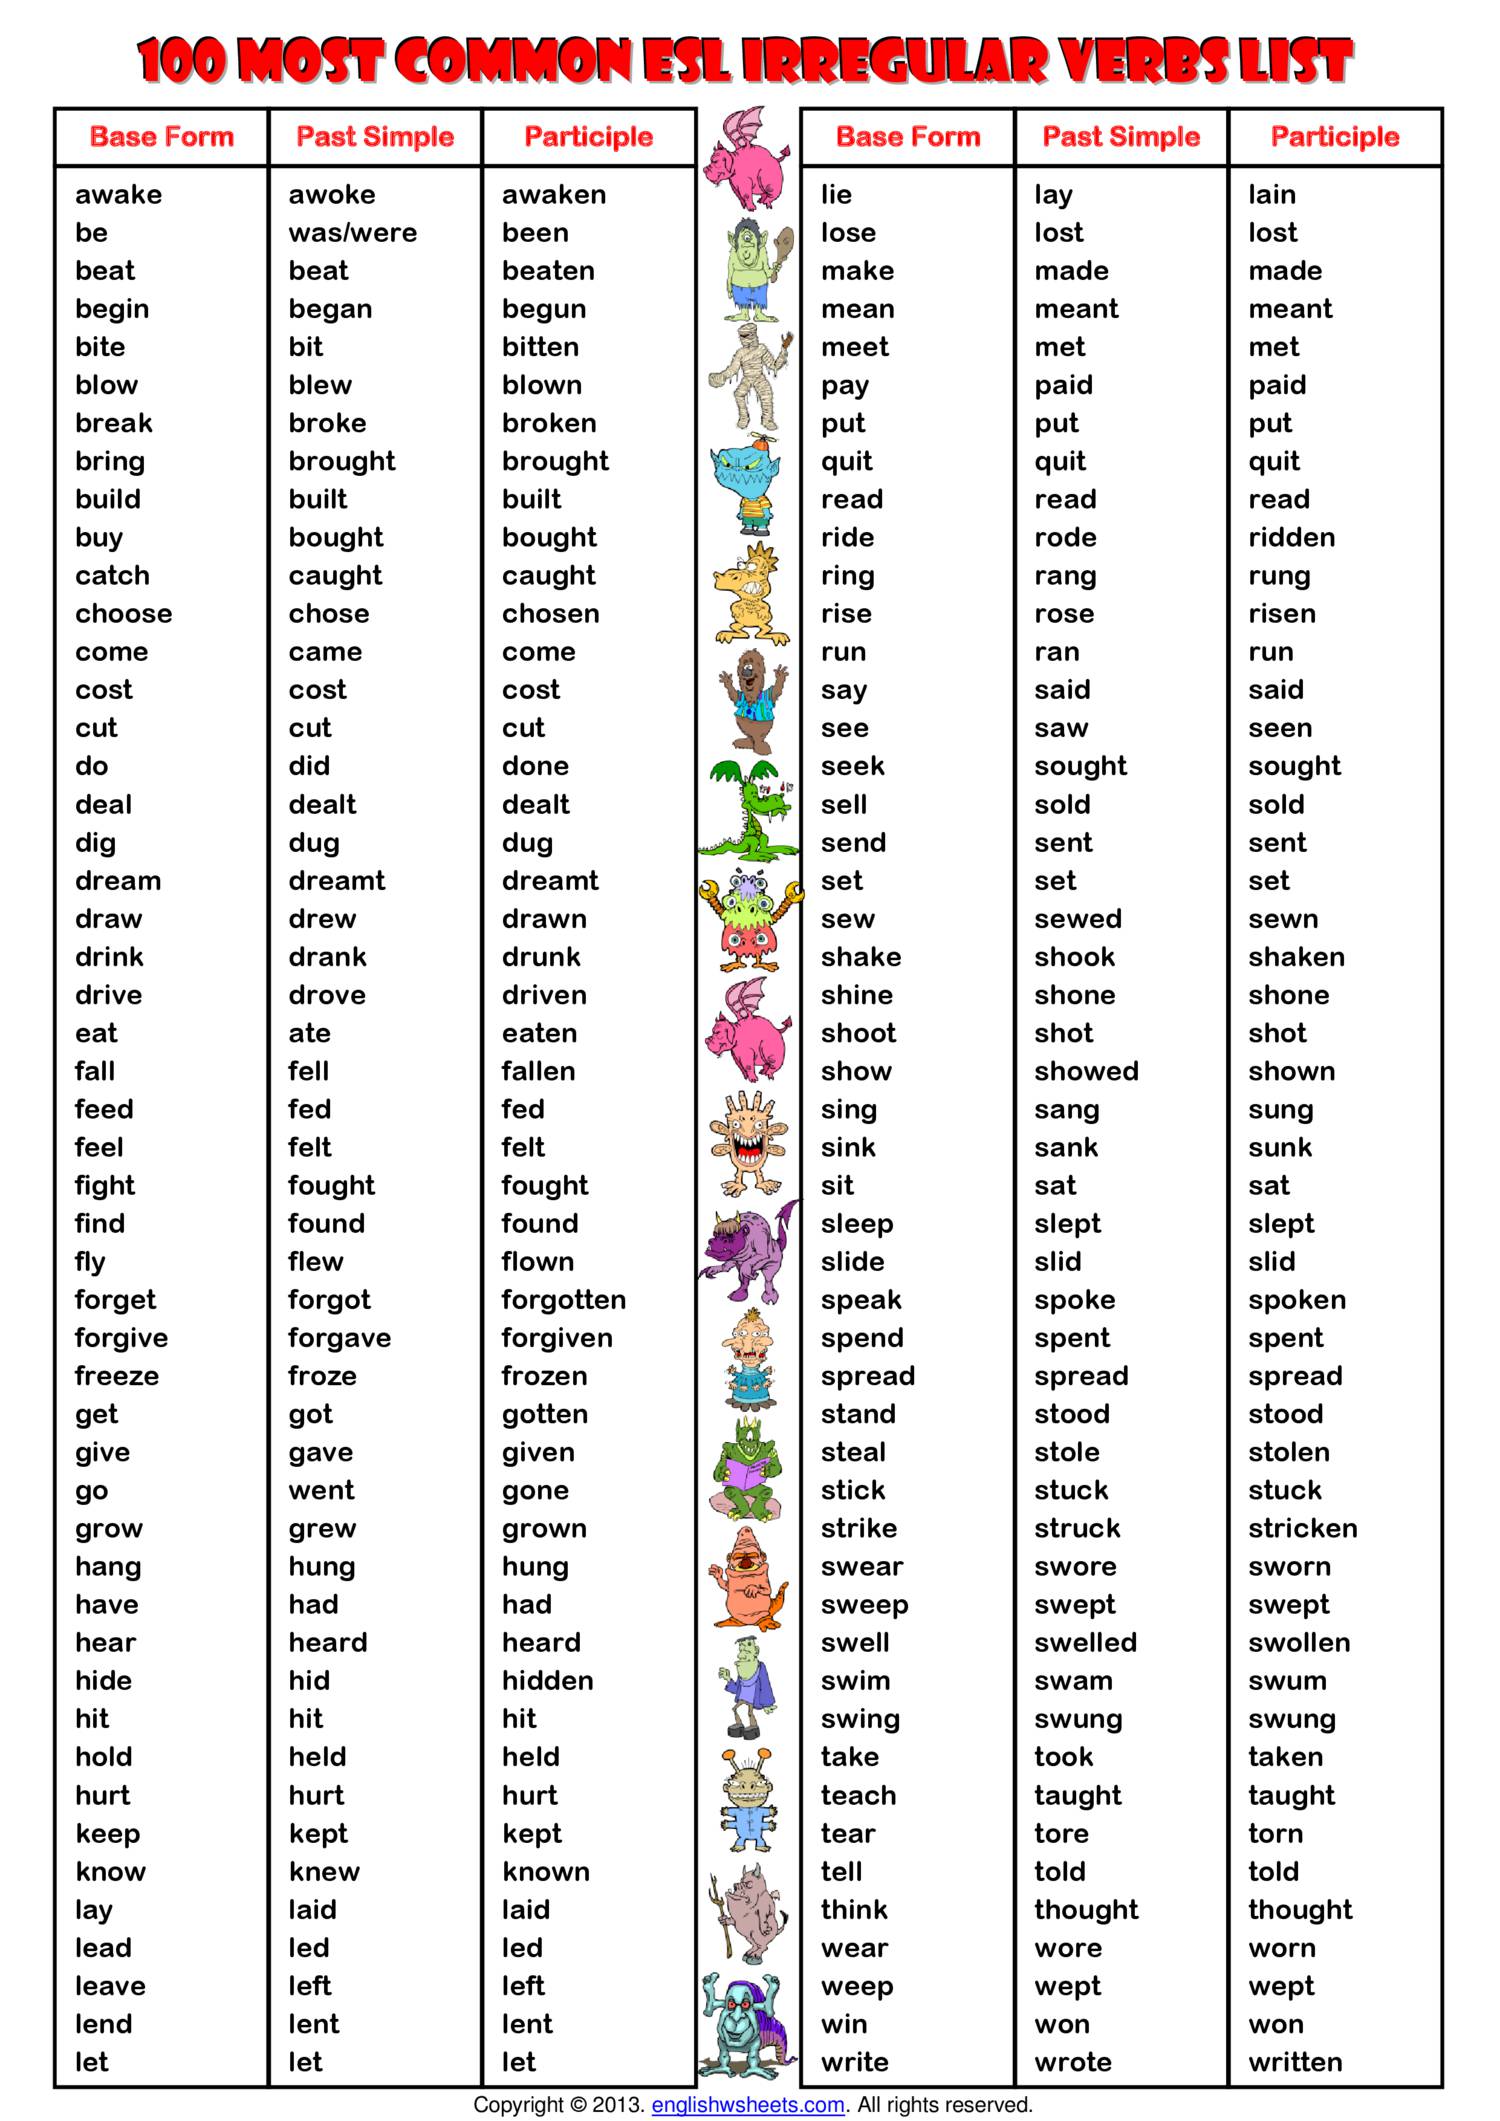 English irregular verbs exercises